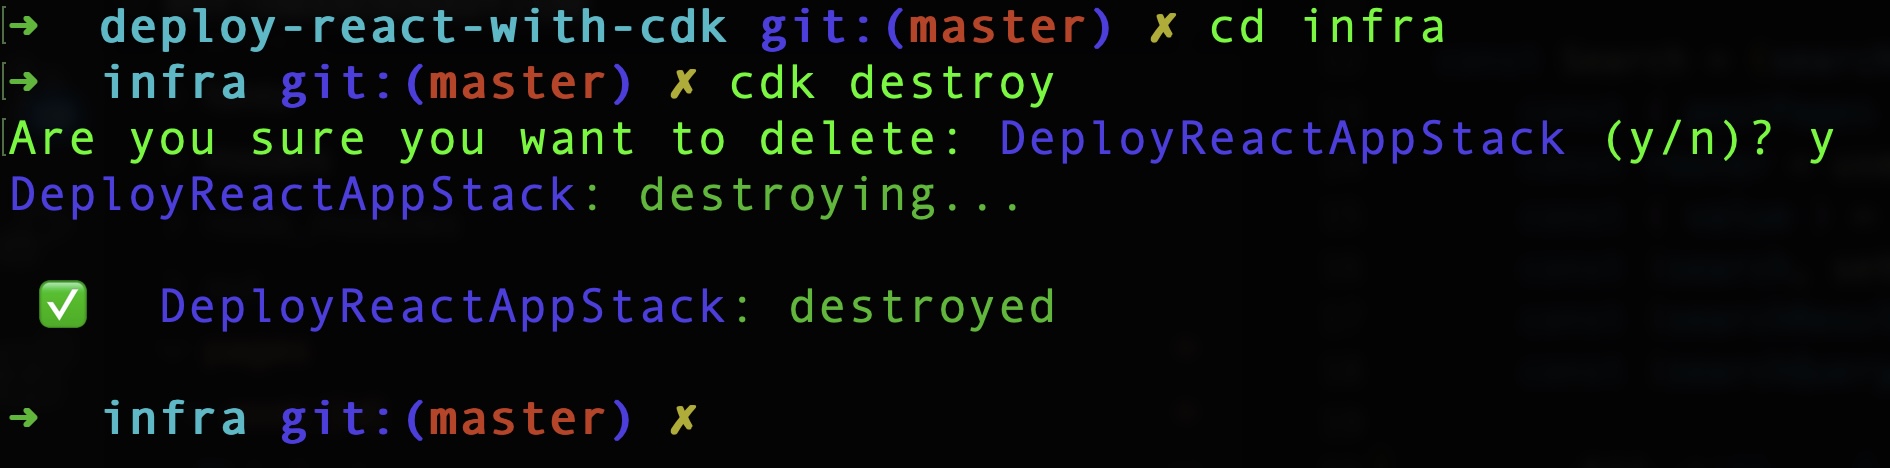 cdk destroy second command